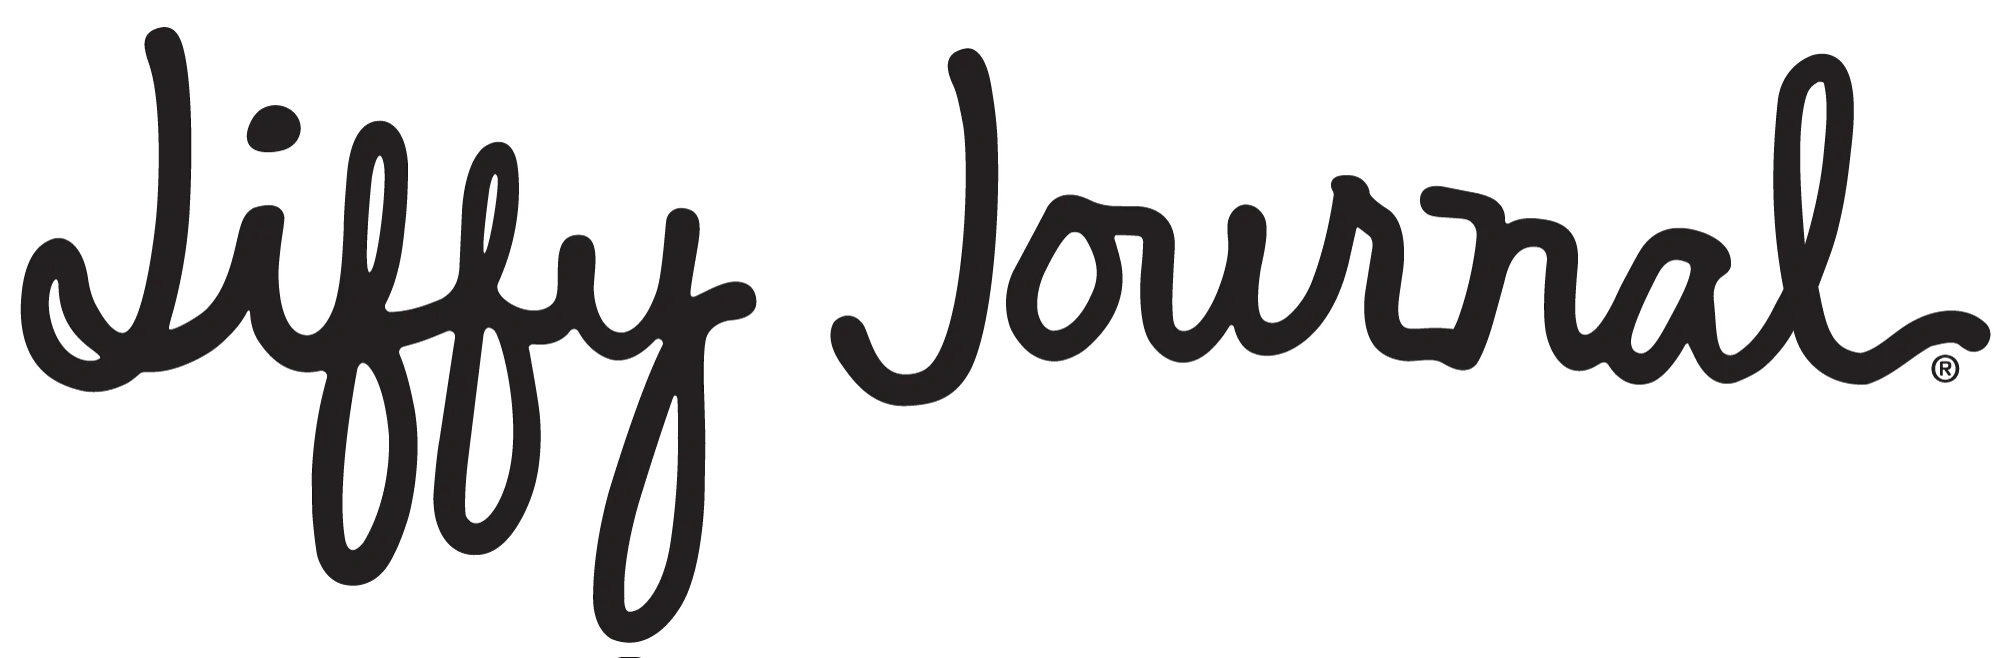 Jiffy Journal logo